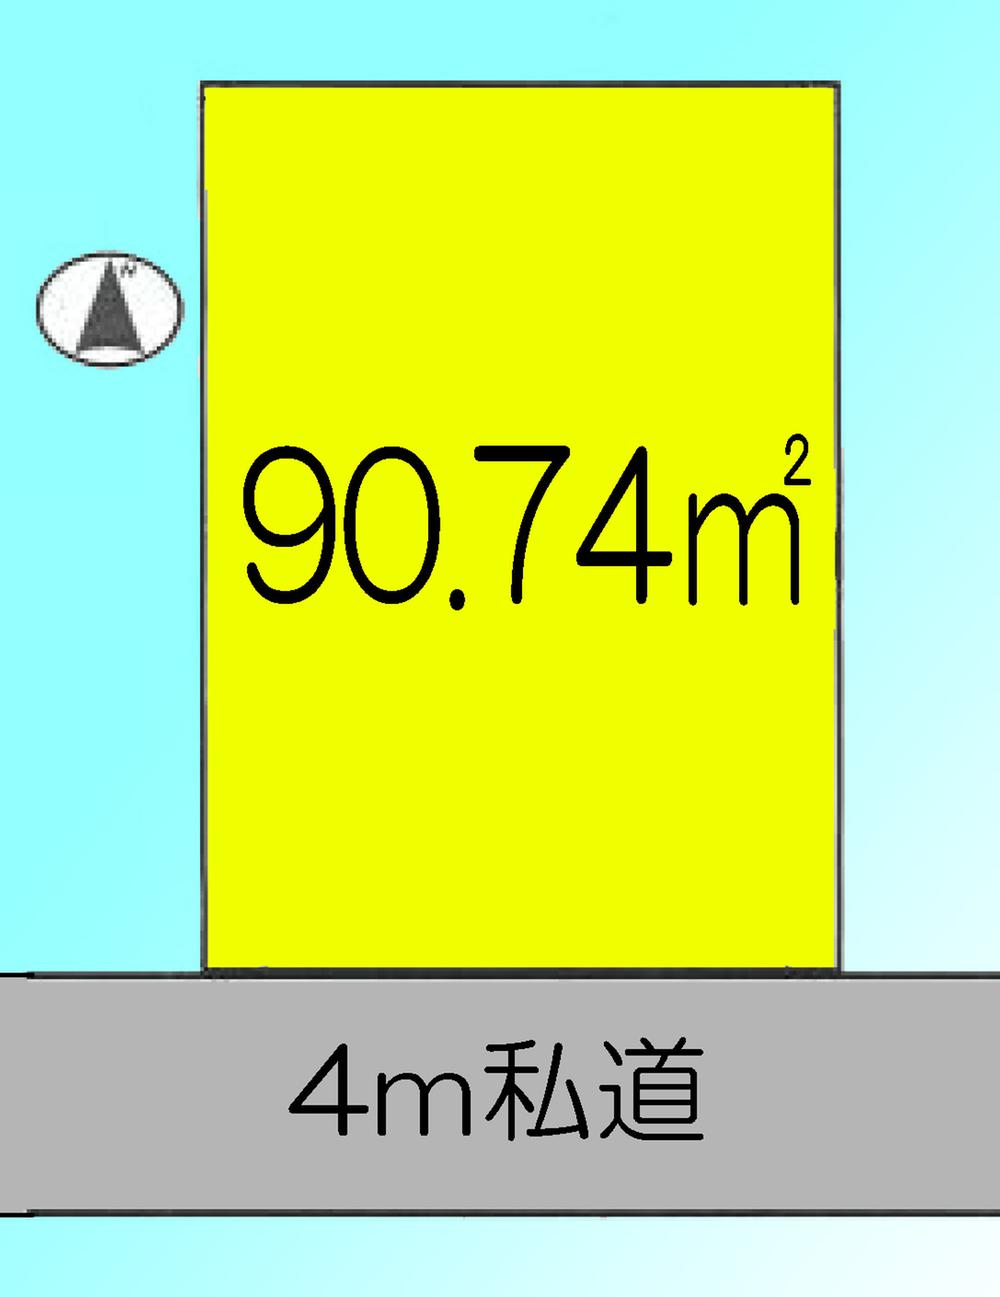 Compartment figure. Land price 21,800,000 yen, Land area 90.74 sq m